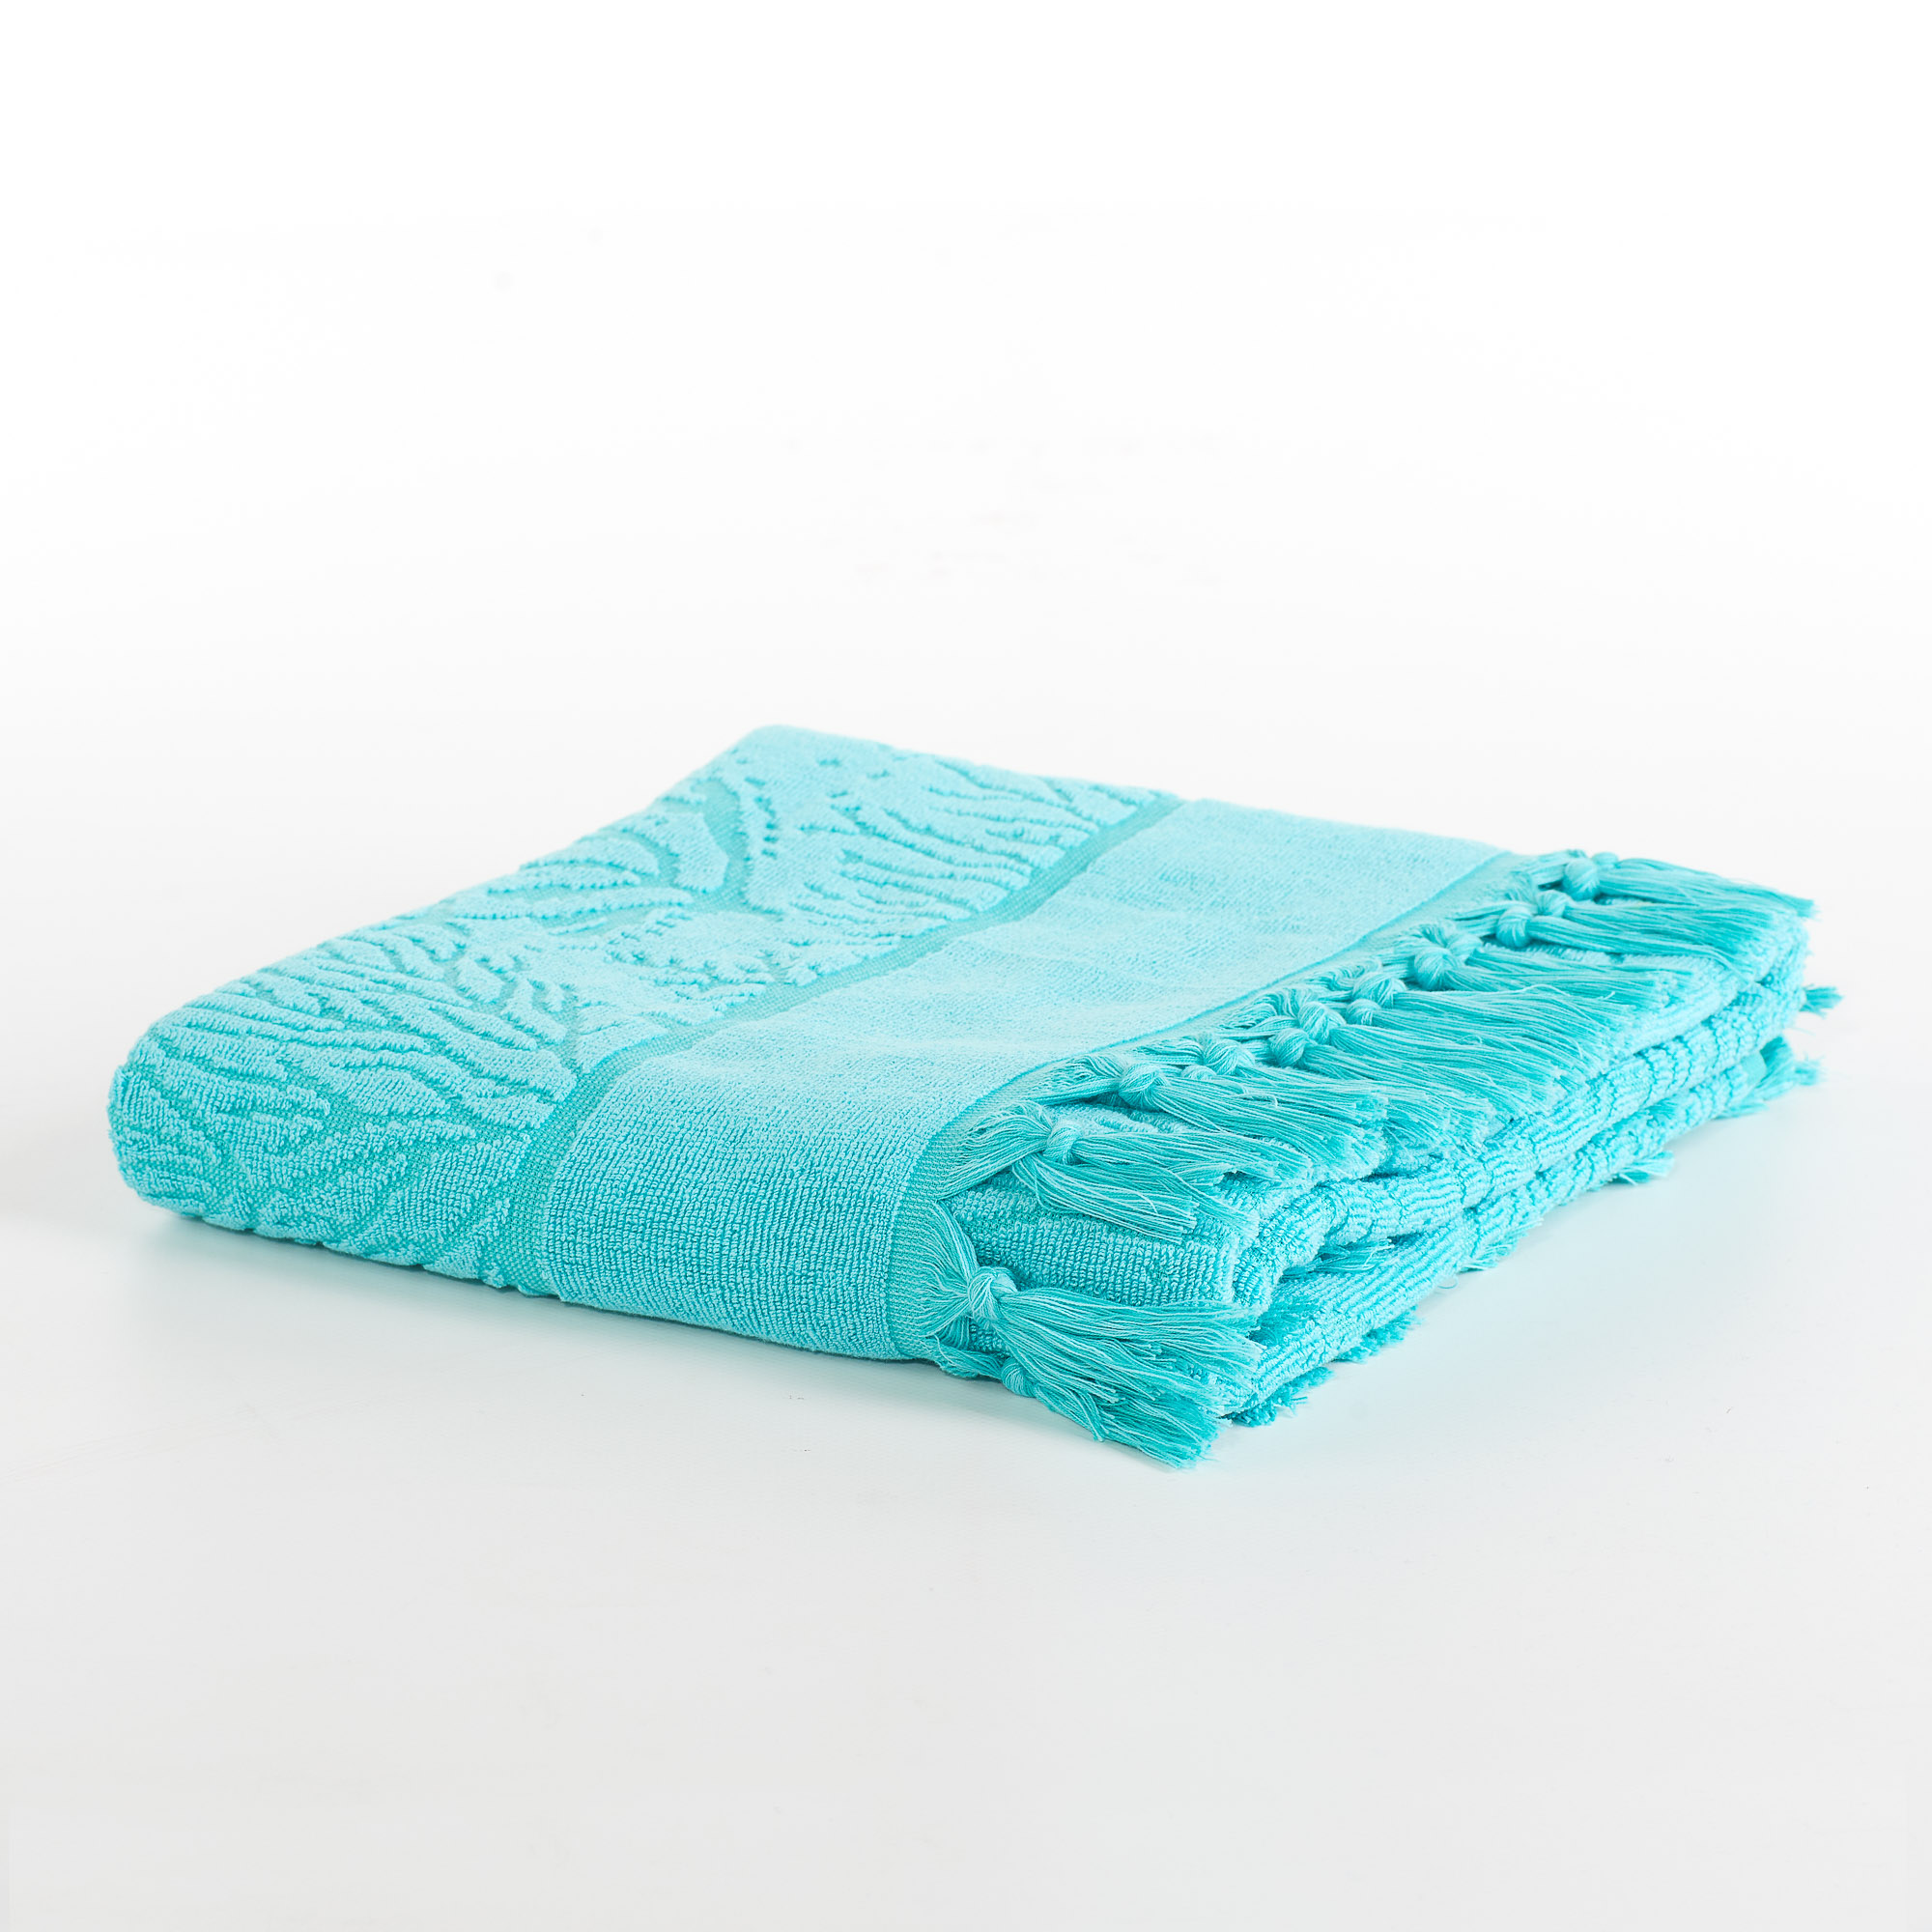 Corallia microsponge beach towel acqua Maè